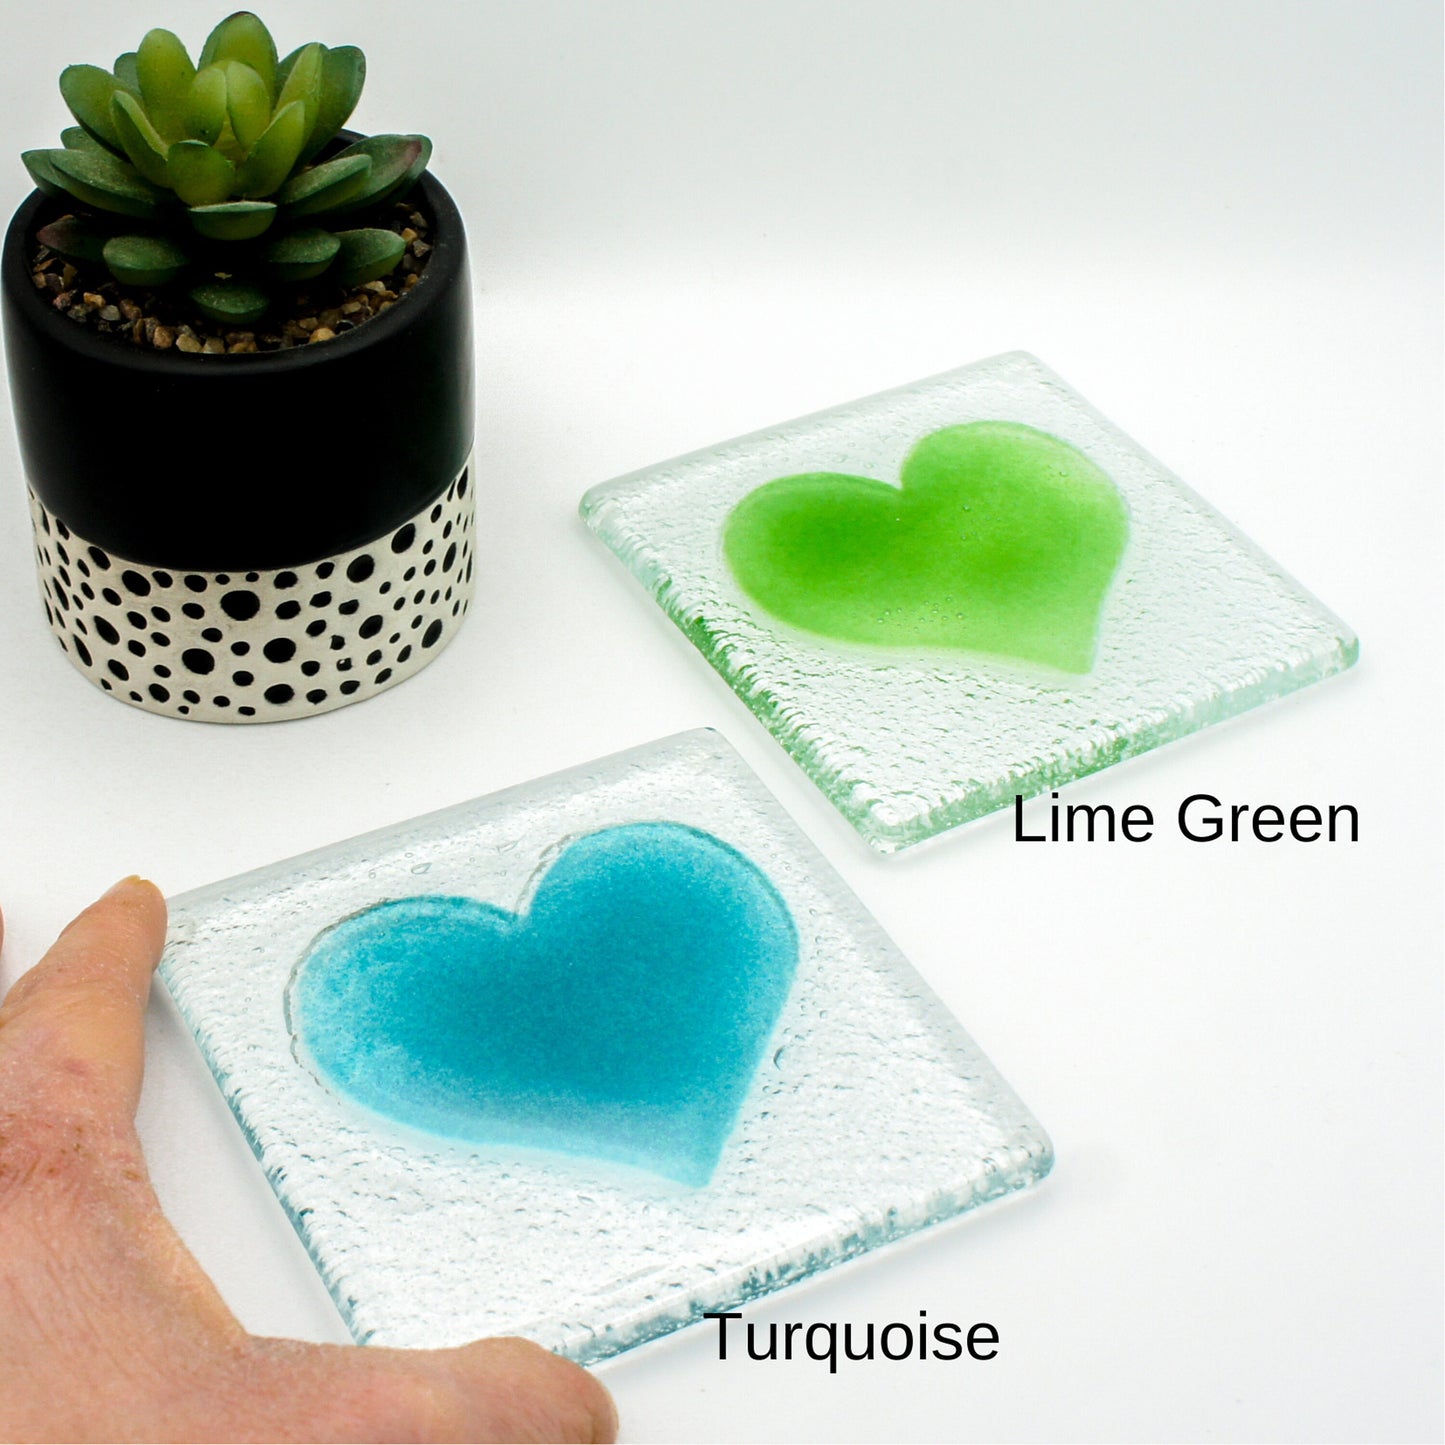 4 Heart Handmade Fused Glass Coasters 10x10cm(4x4"), Choose your colours, fused glass heart coasters